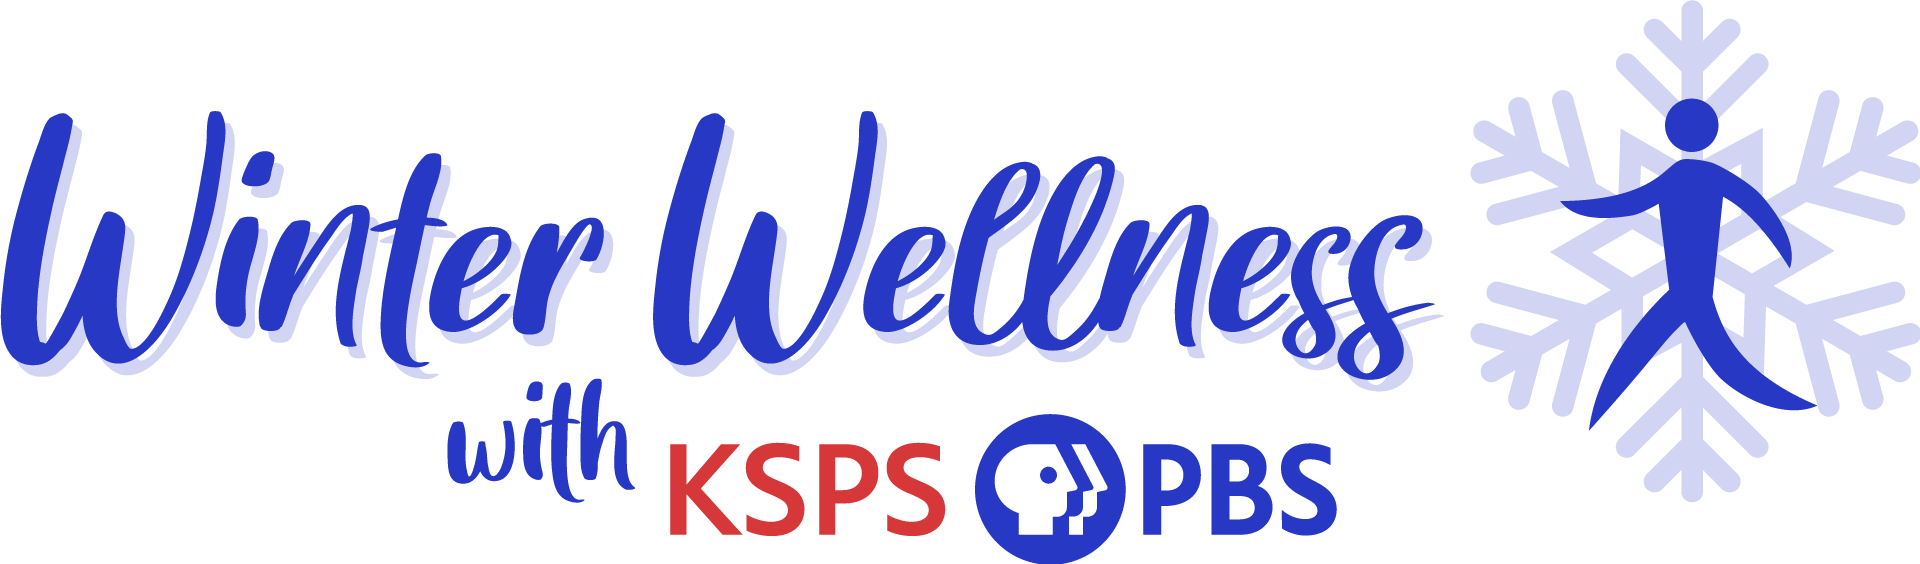 Winter Wellness with KSPS PBS